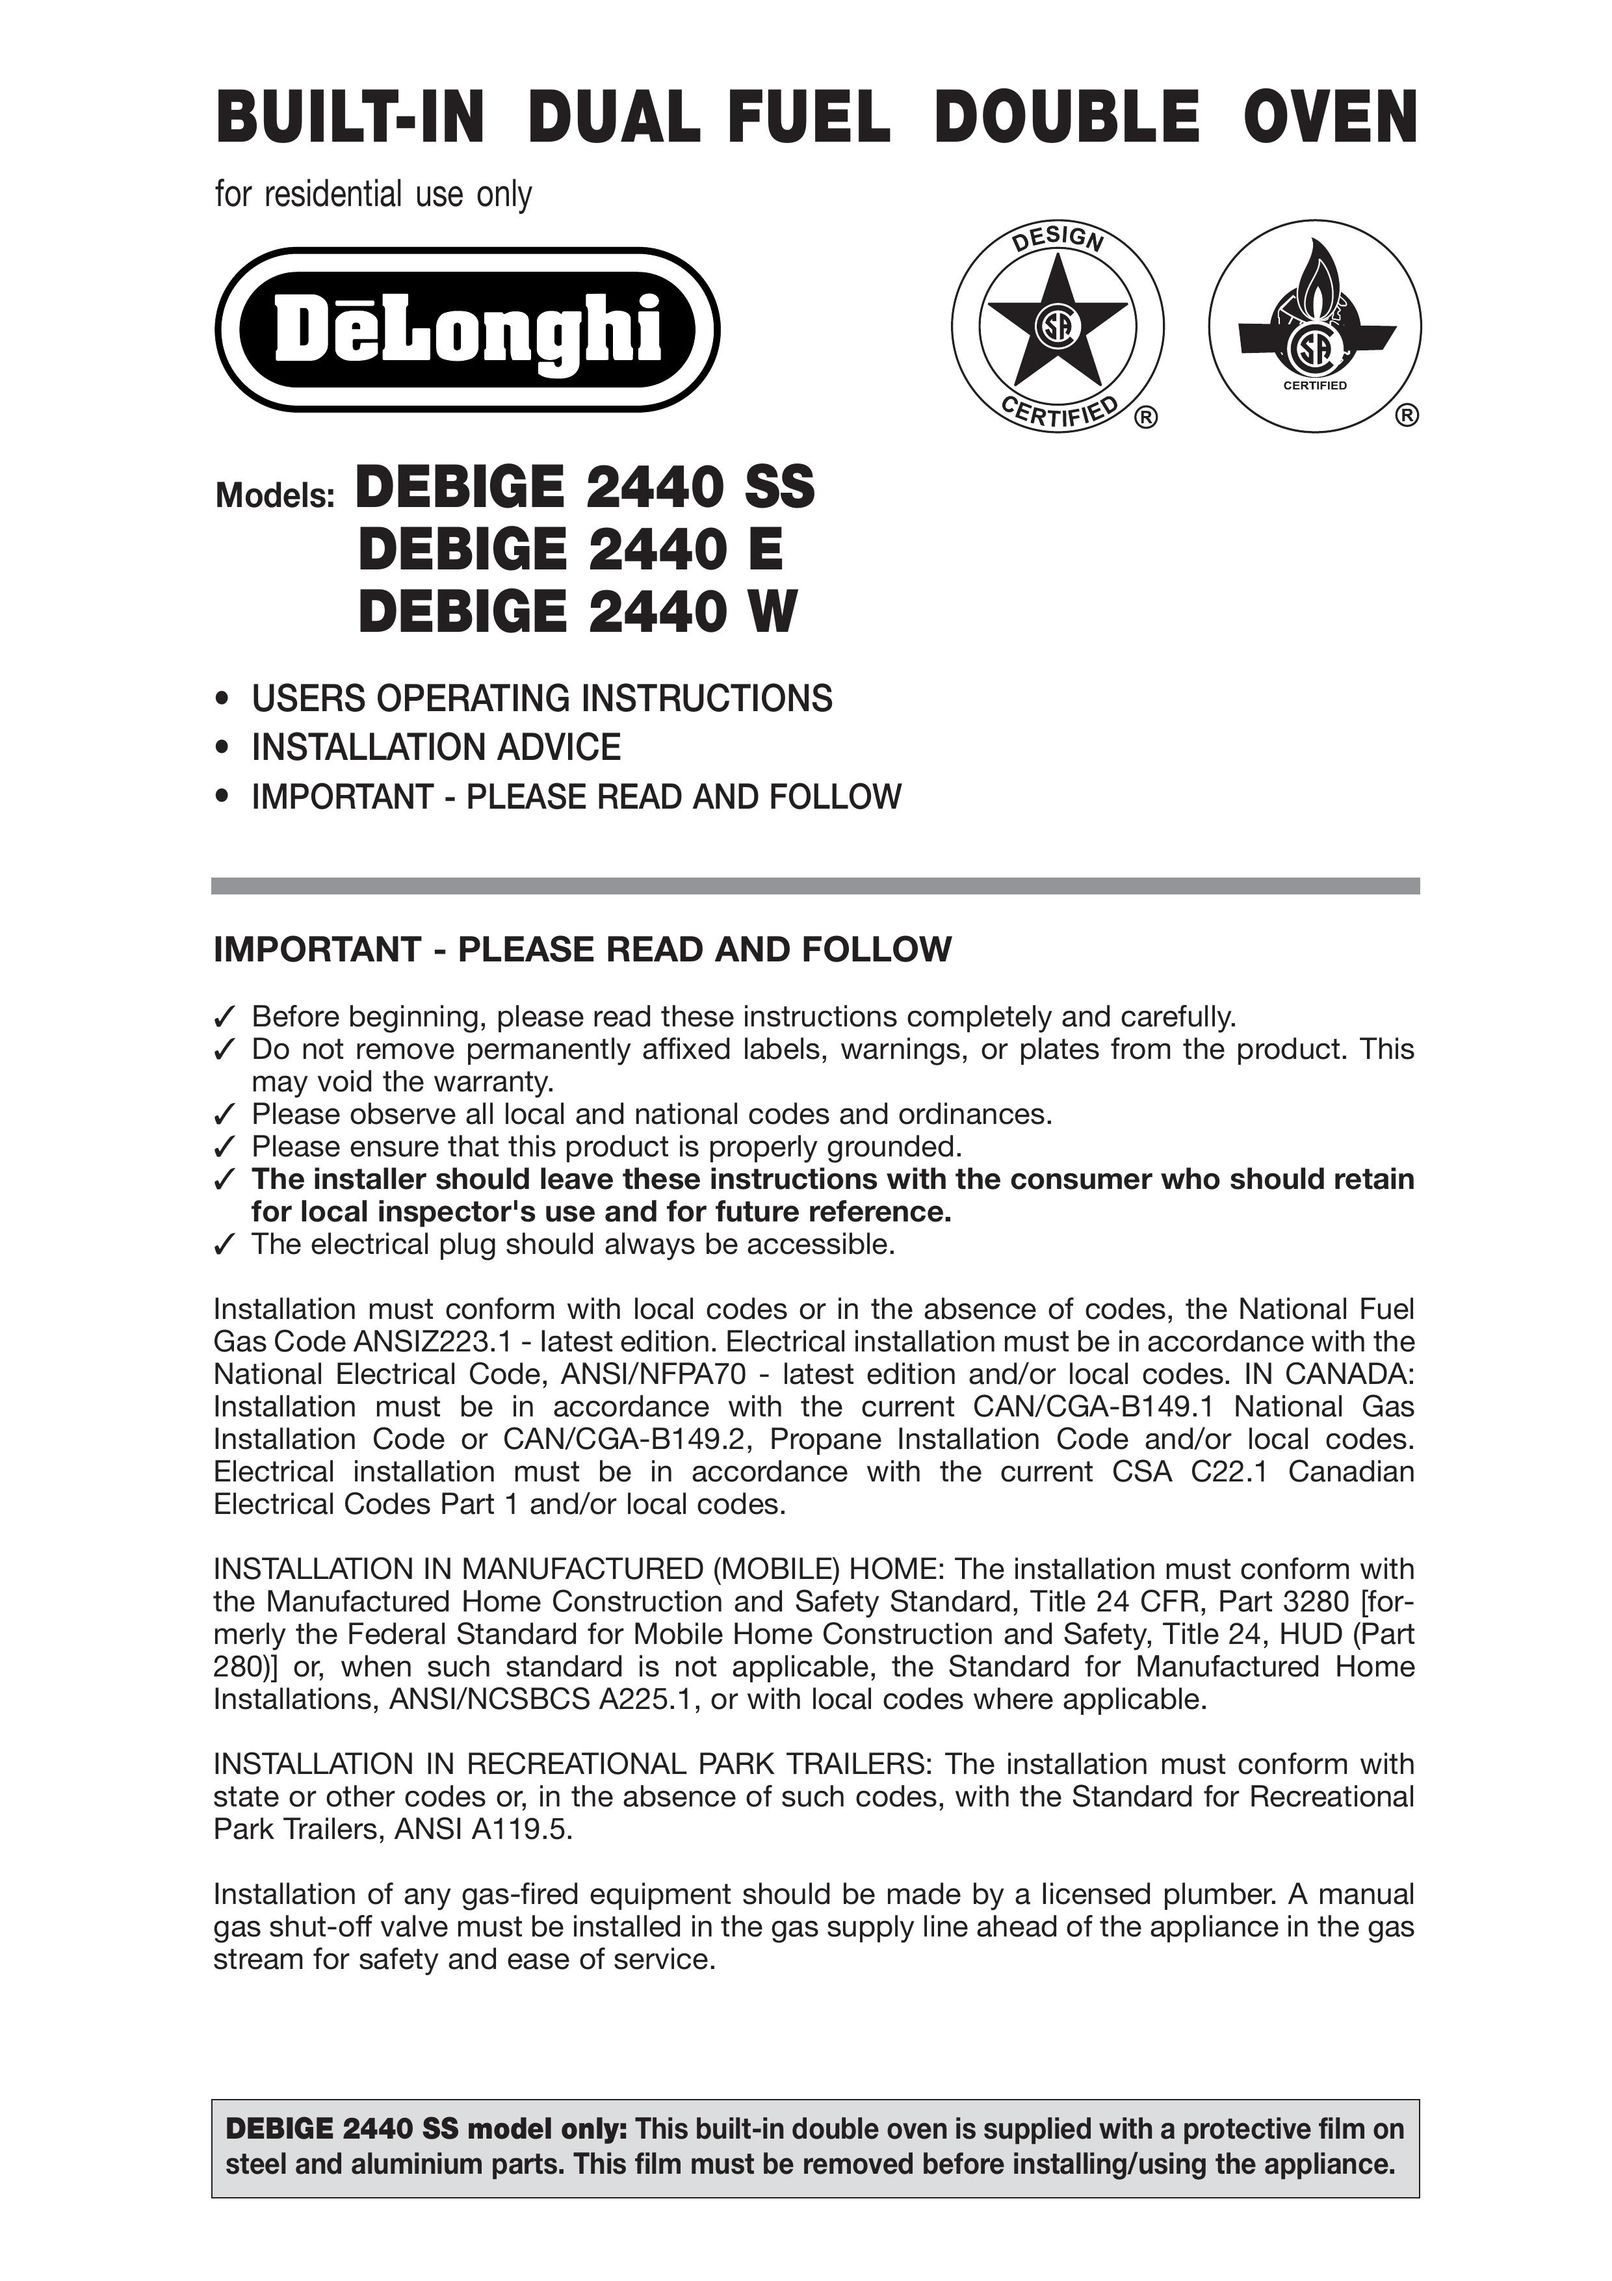 DeLonghi DEBIGE 2440 SS Double Oven User Manual